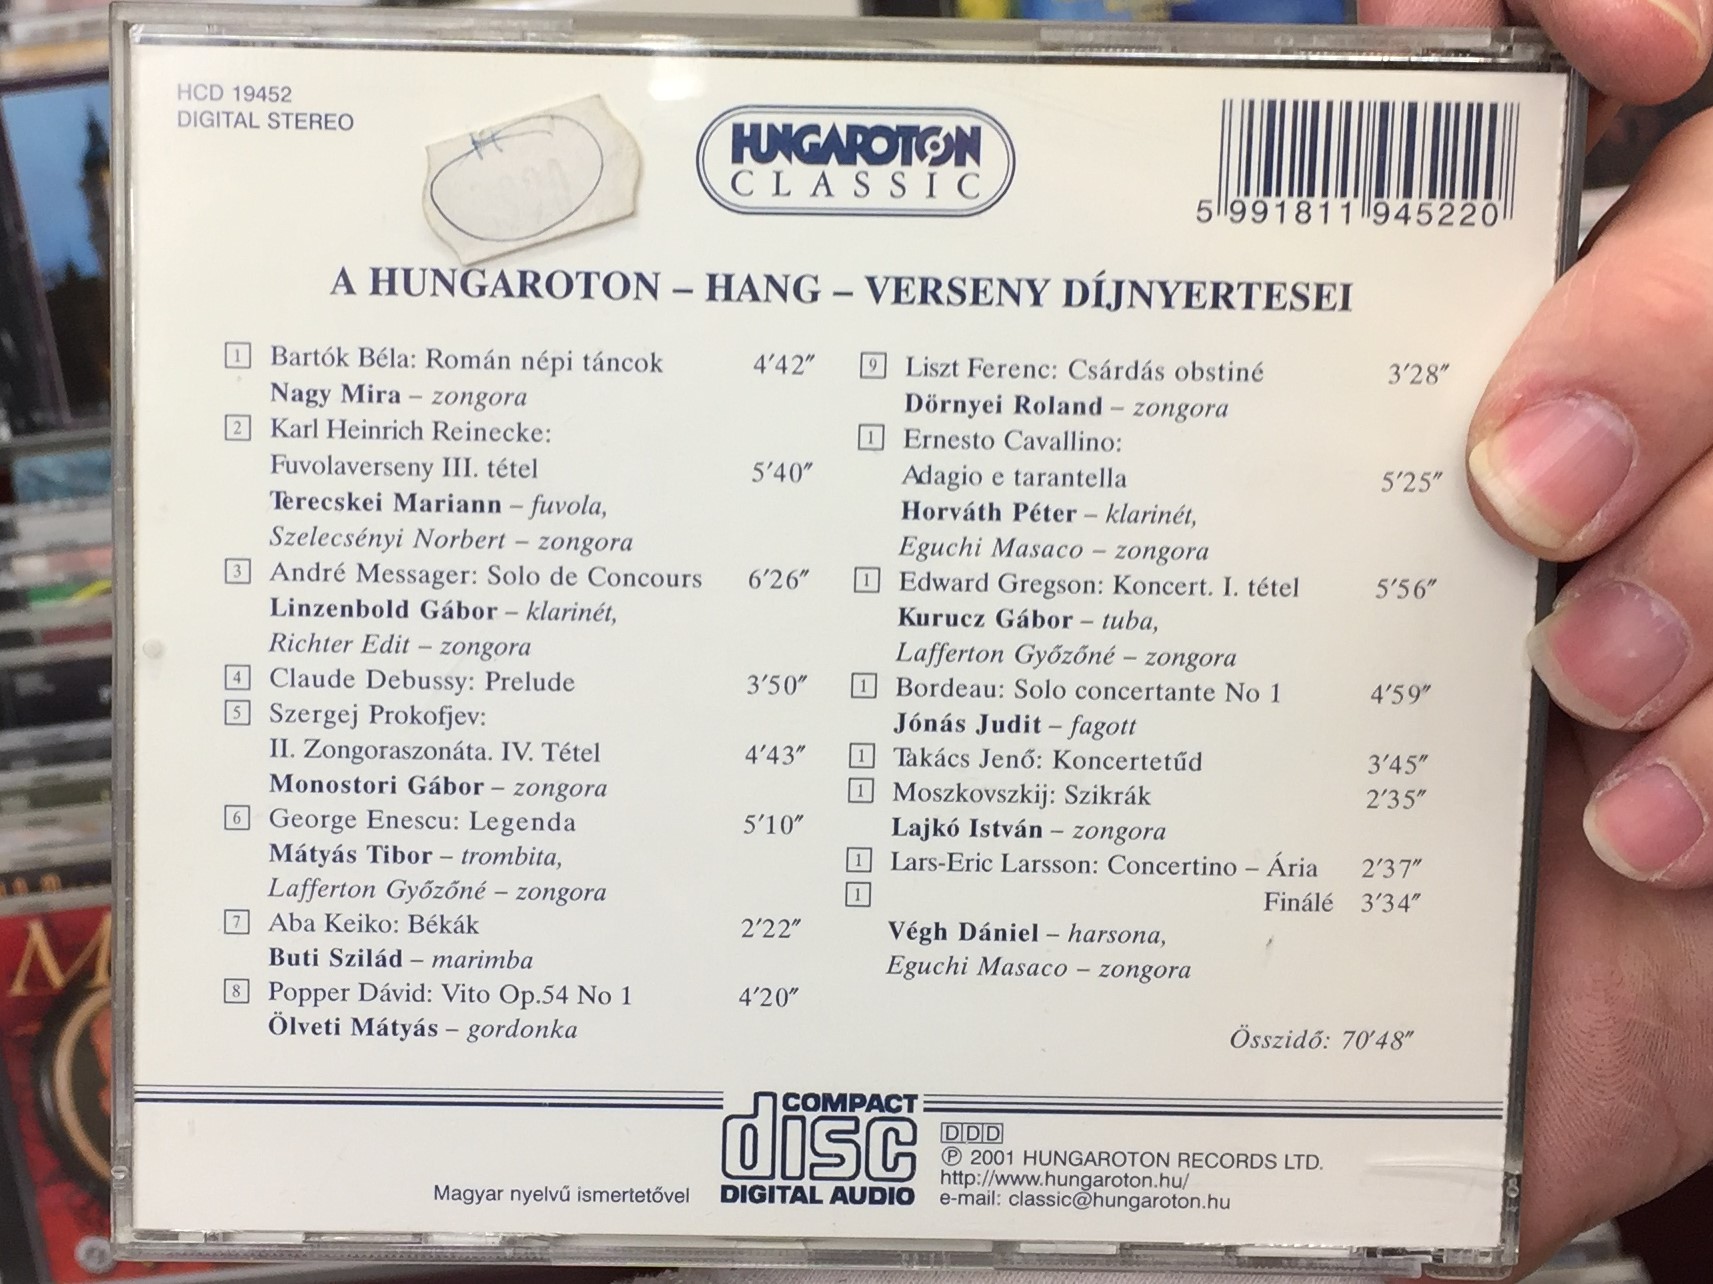 hungaroton-hang-verseny-2000-dijnyertesei-nagy-mira-terecskei-mariann-linzenbold-gabor-monostori-gabor-matyas-tibor-buti-szilard-kurucz-gabor-lajko-istvan-hungaroton-classic-audio-cd.jpg